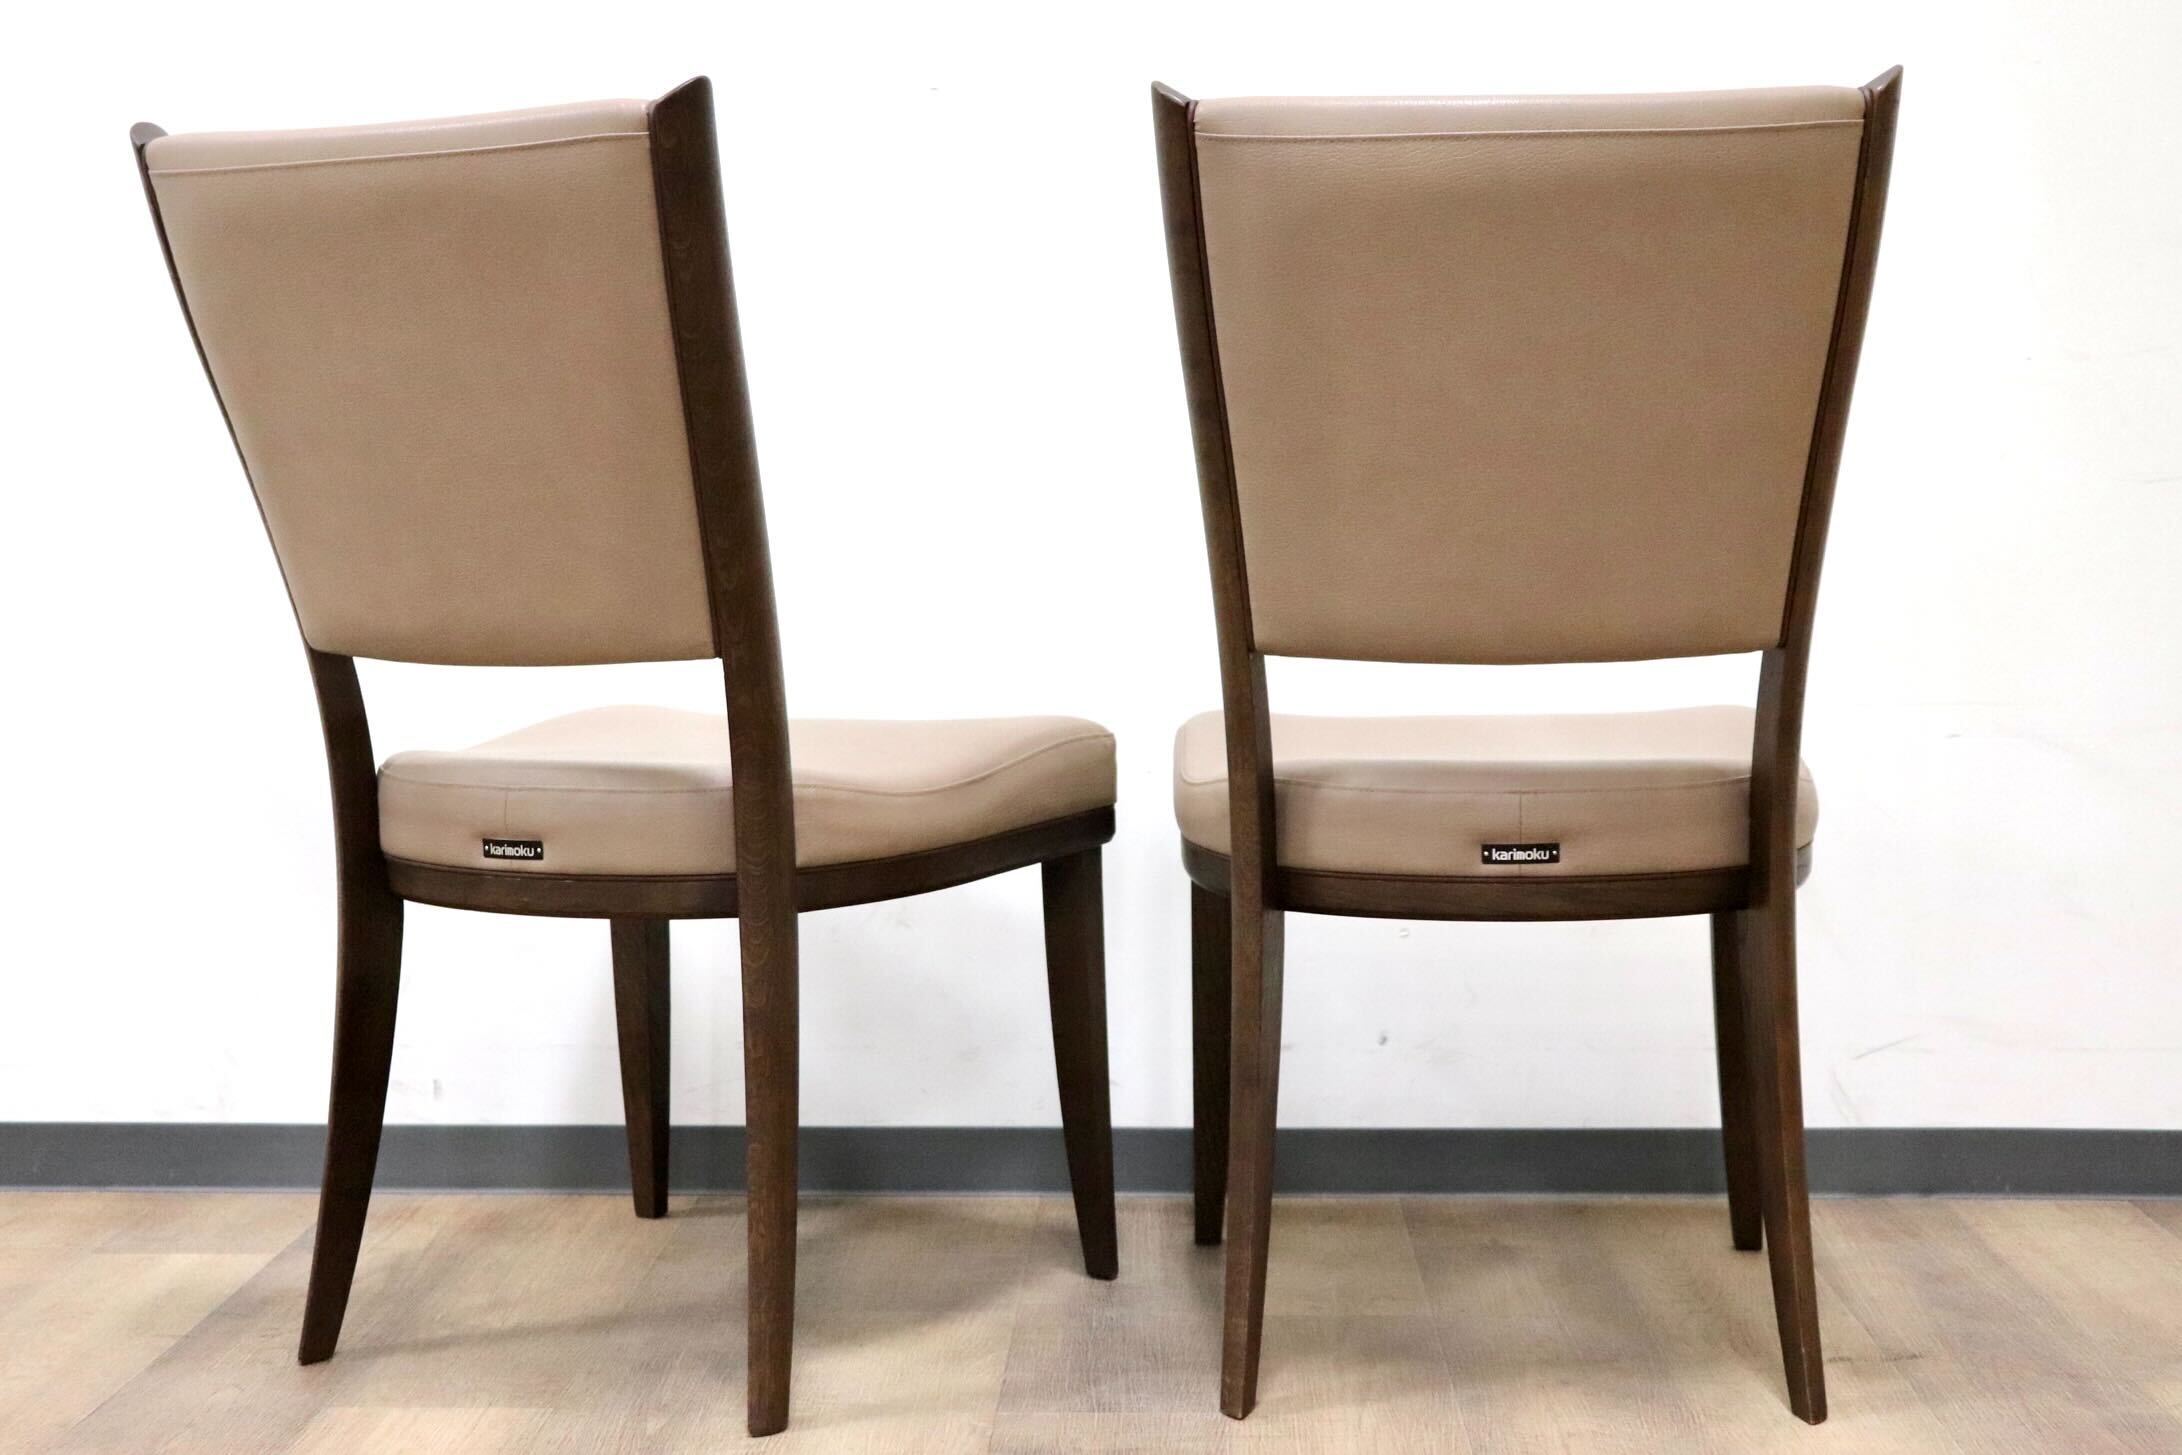 GMGS266A○karimoku / カリモク CT73 ダイニングチェア 食卓椅子 2脚セット オーク材 合皮 グレイッシュブラウン 国産家具  定価約9.2万